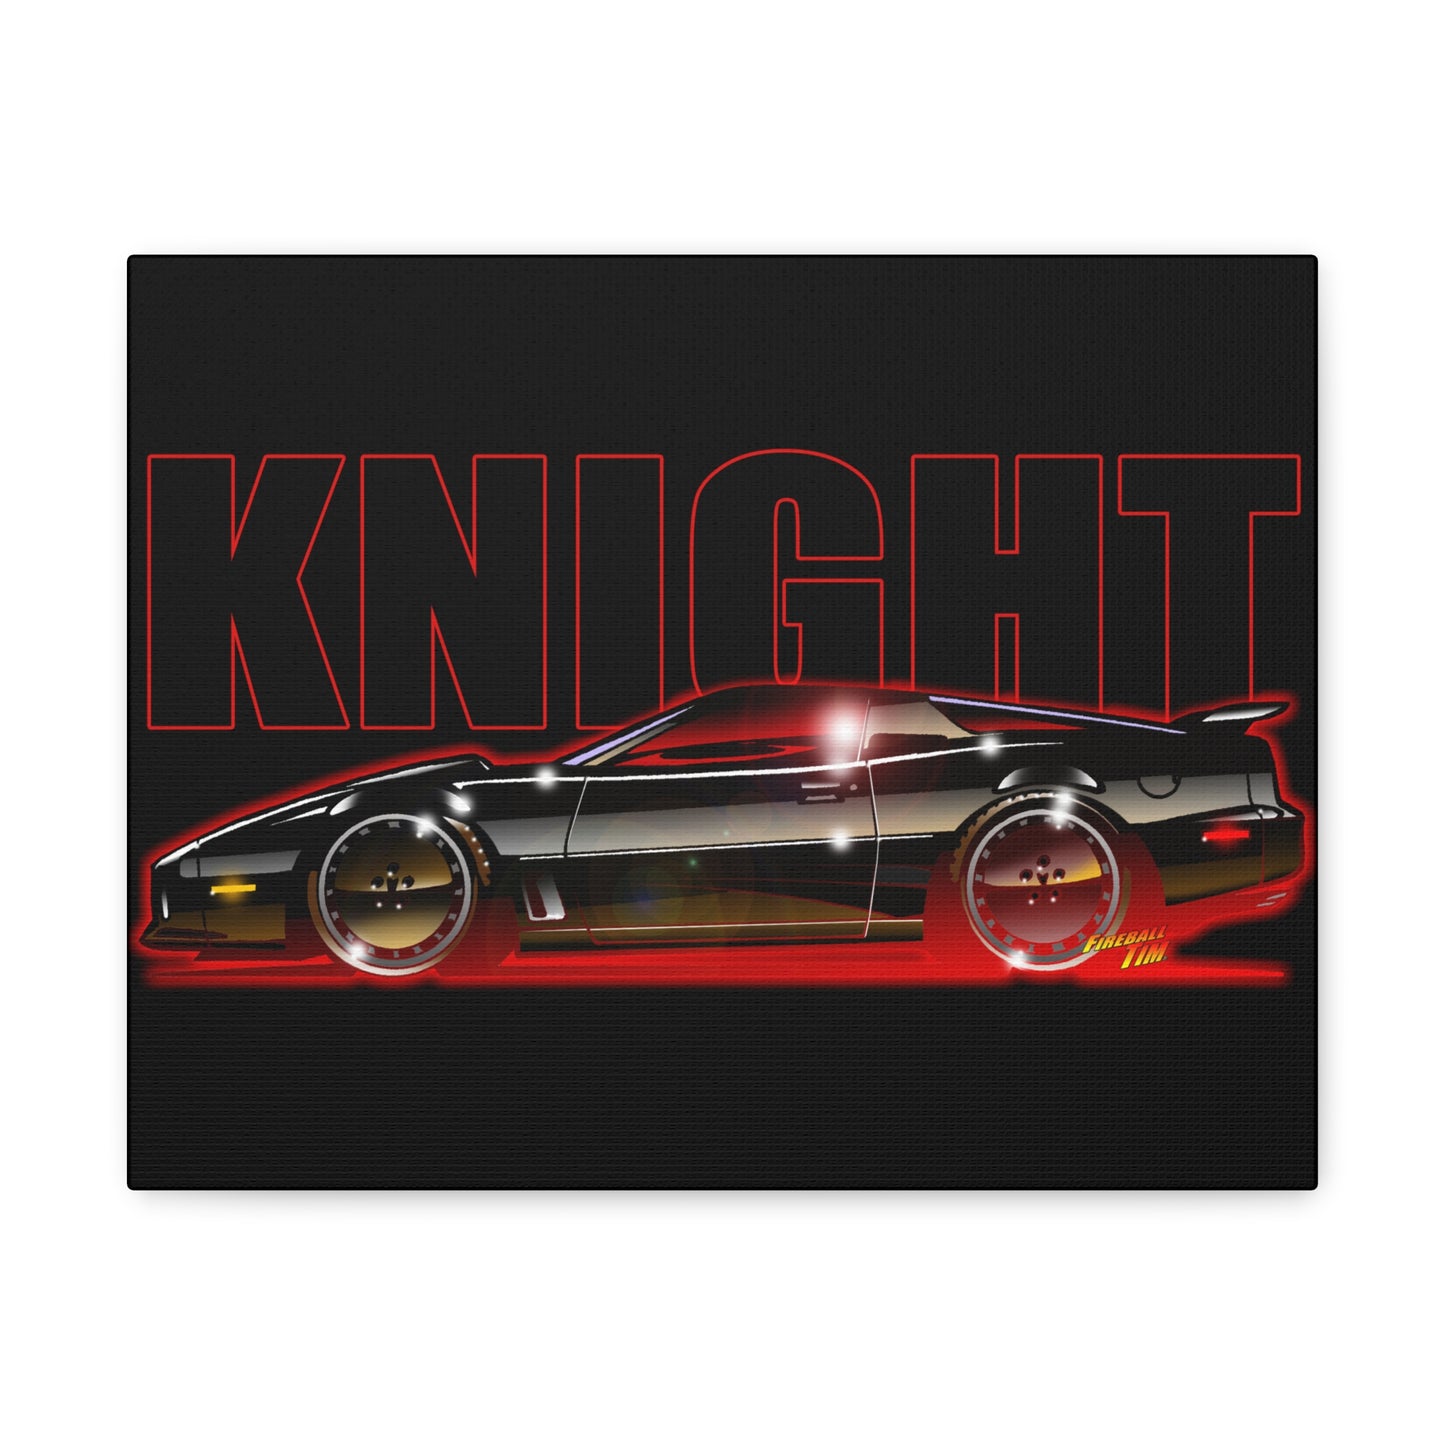 KNIGHT RIDER Pontiac Firebird TV Car Canvas Gallery Art Print 11x14